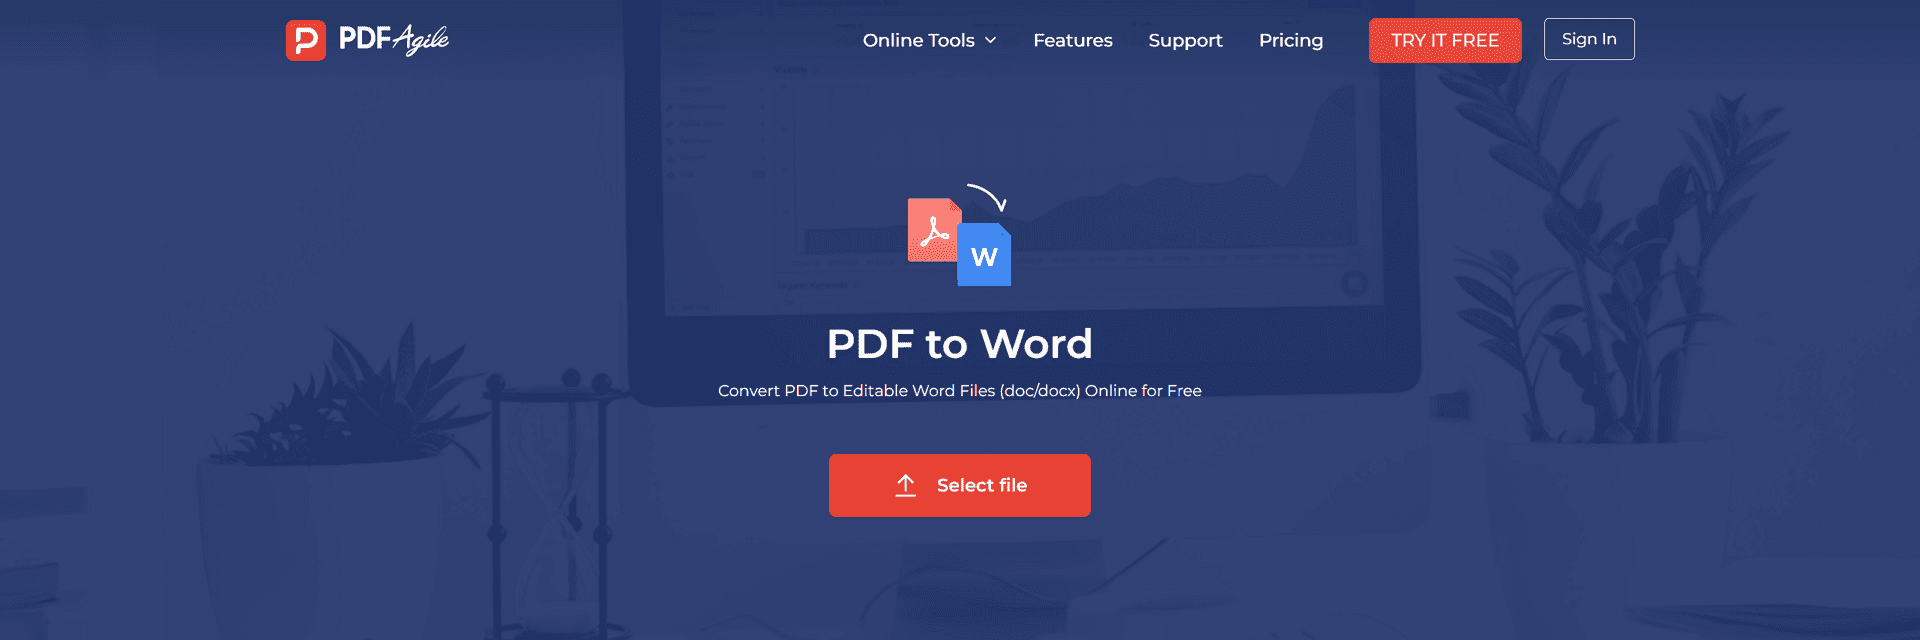 PDF Agile Online PDF to Word Converter